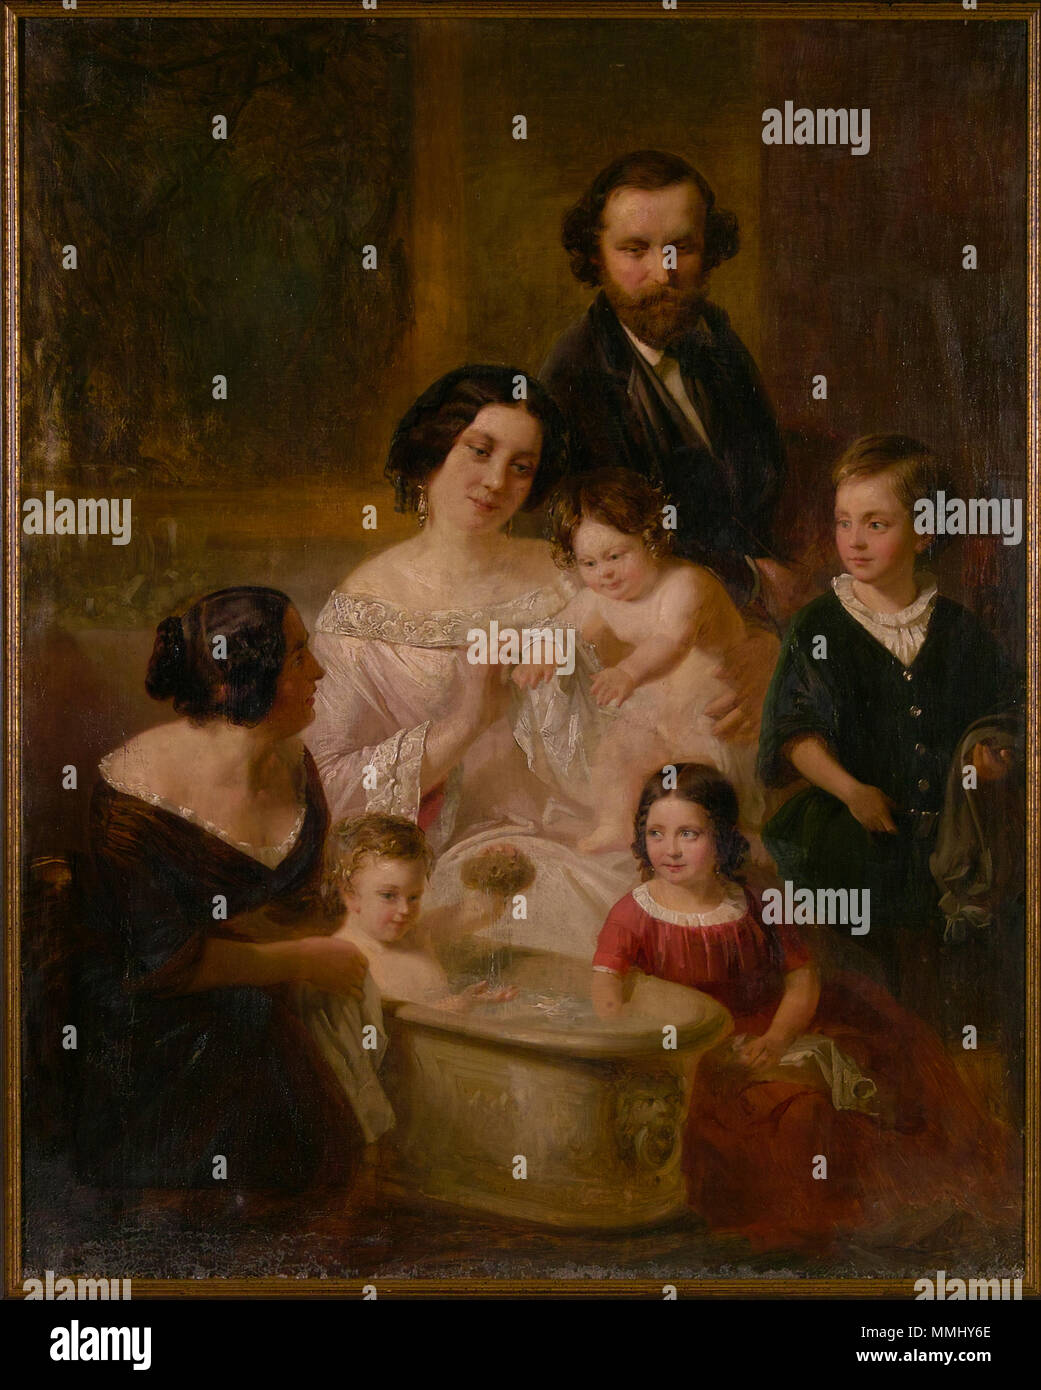 Edmund Wodick "Familienbild", 1855 Öl auf Leinwand Foto Stock